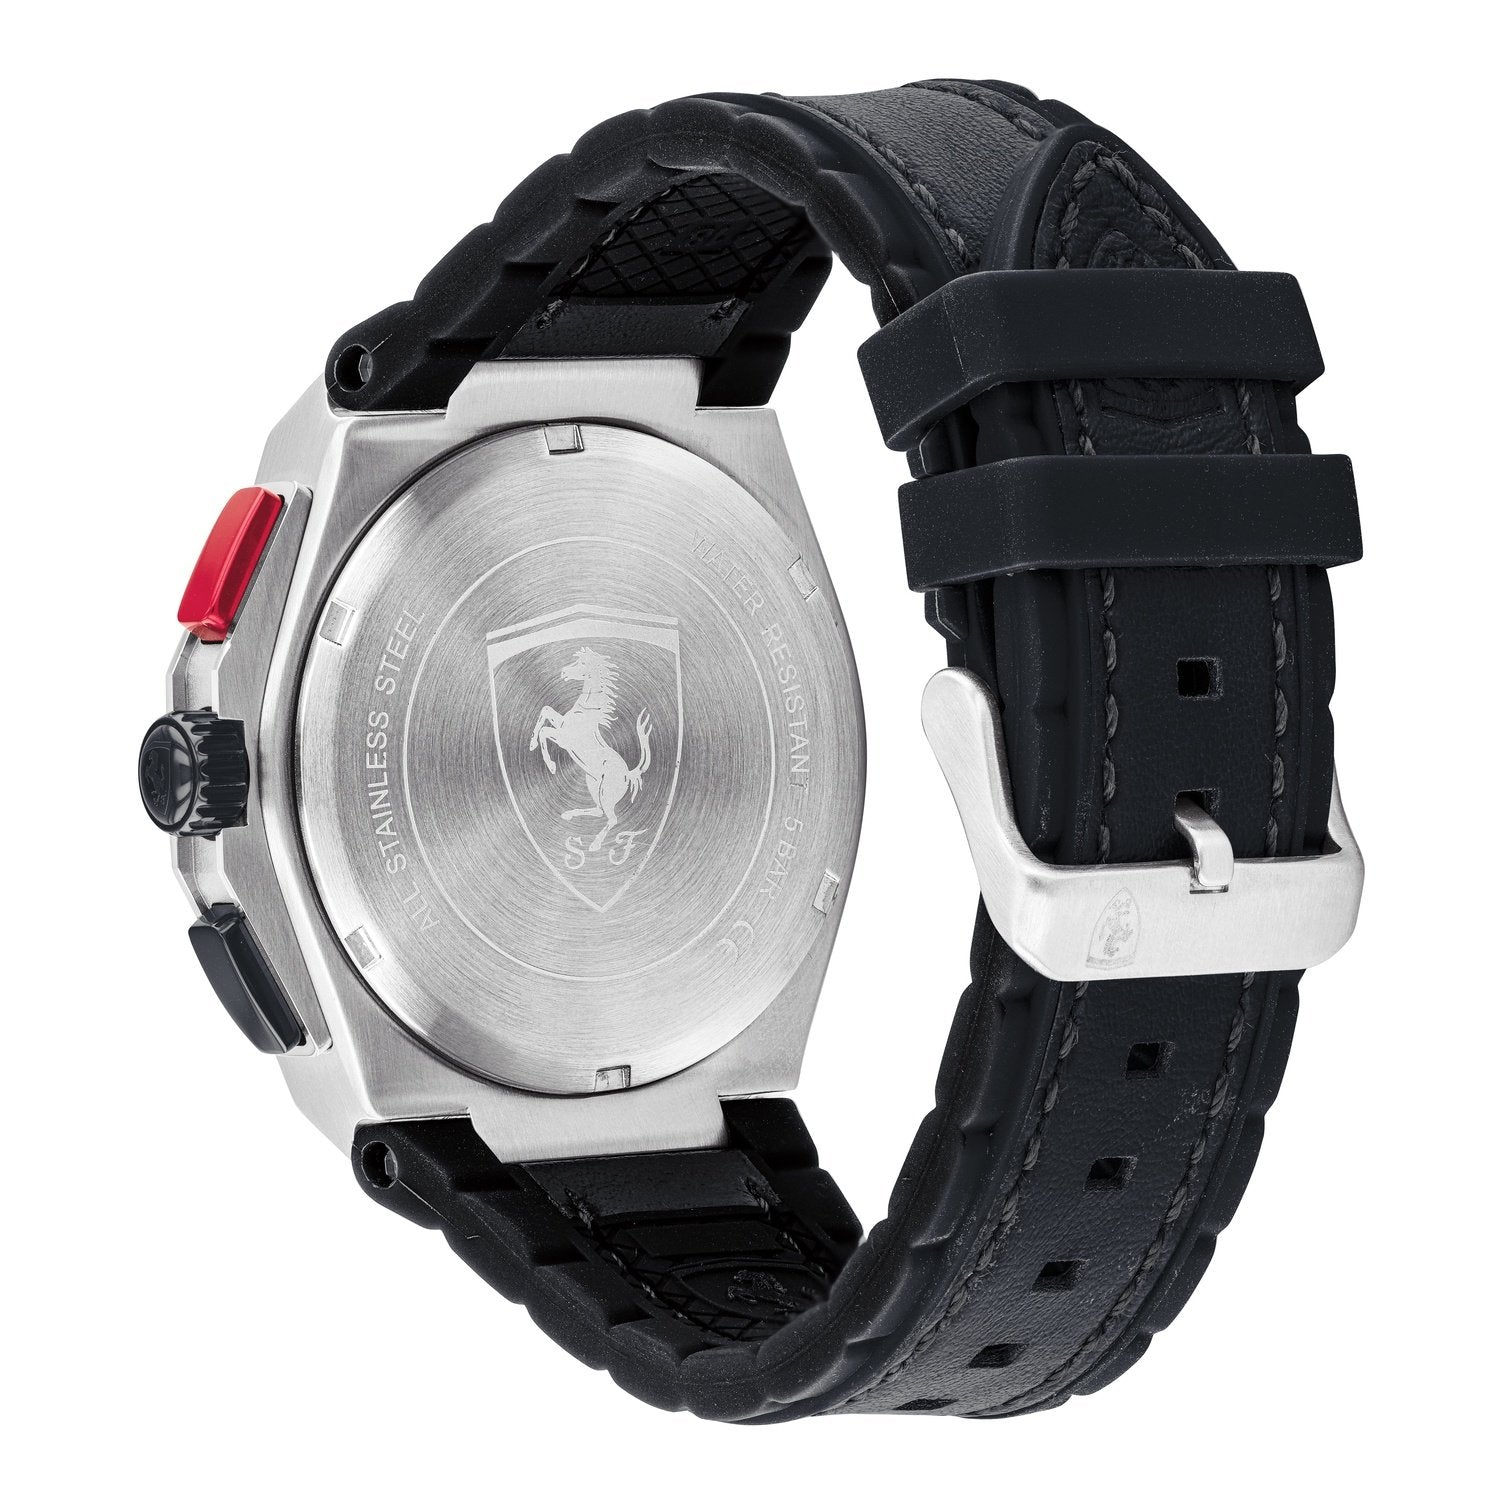 Buy Ferrari 830843 Aspire Analog Watch for Men at Best Price @ Tata CLiQ